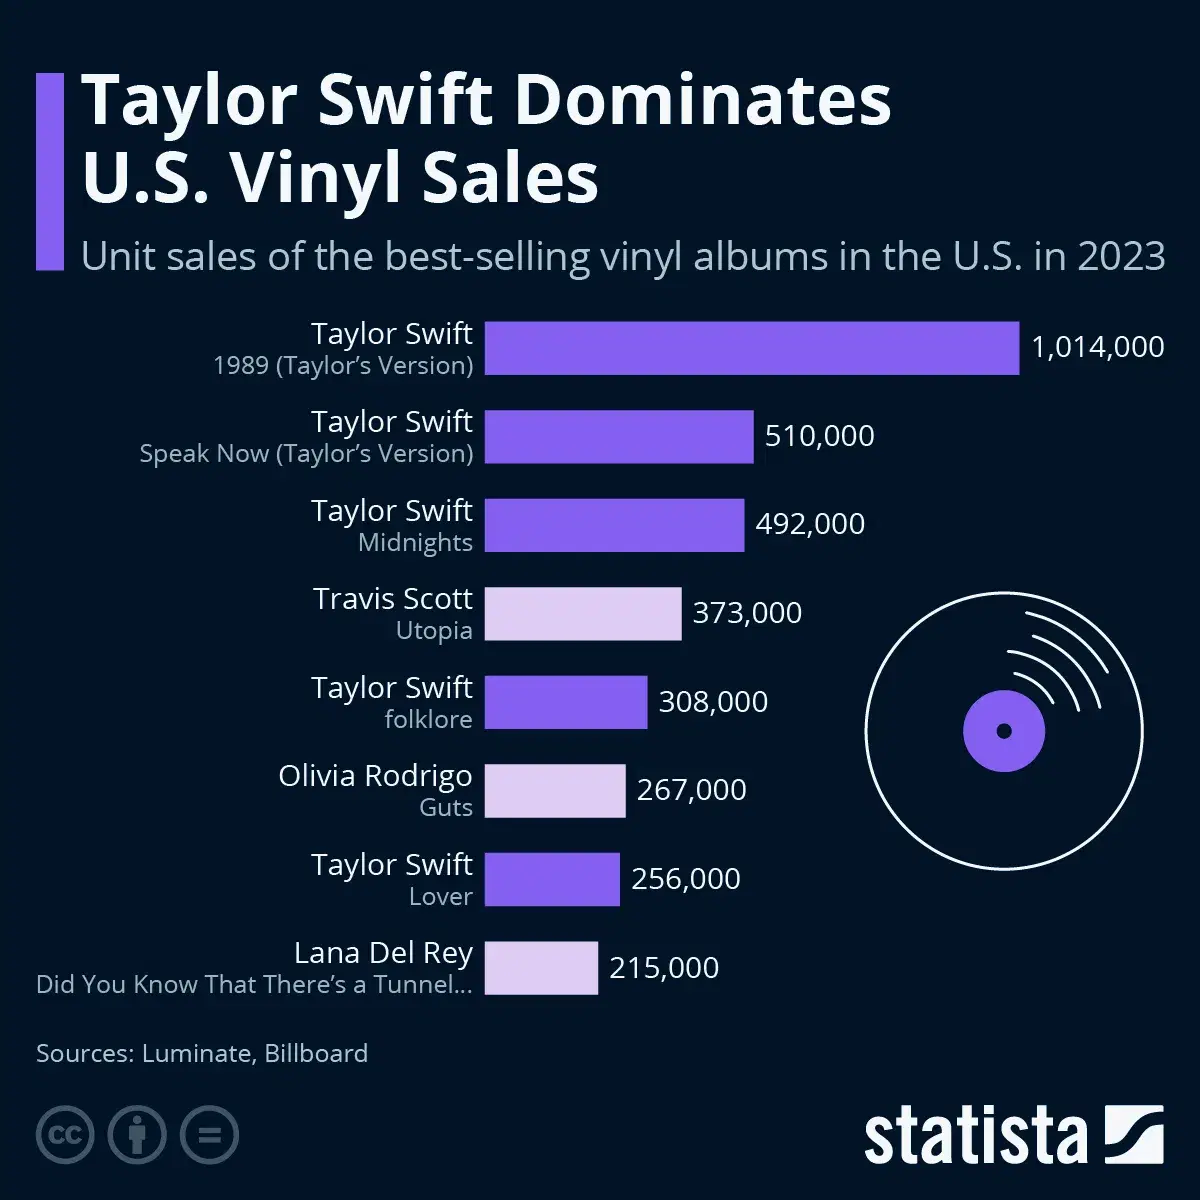 Taylor Swift Dominates U.S. Vinyl Sales